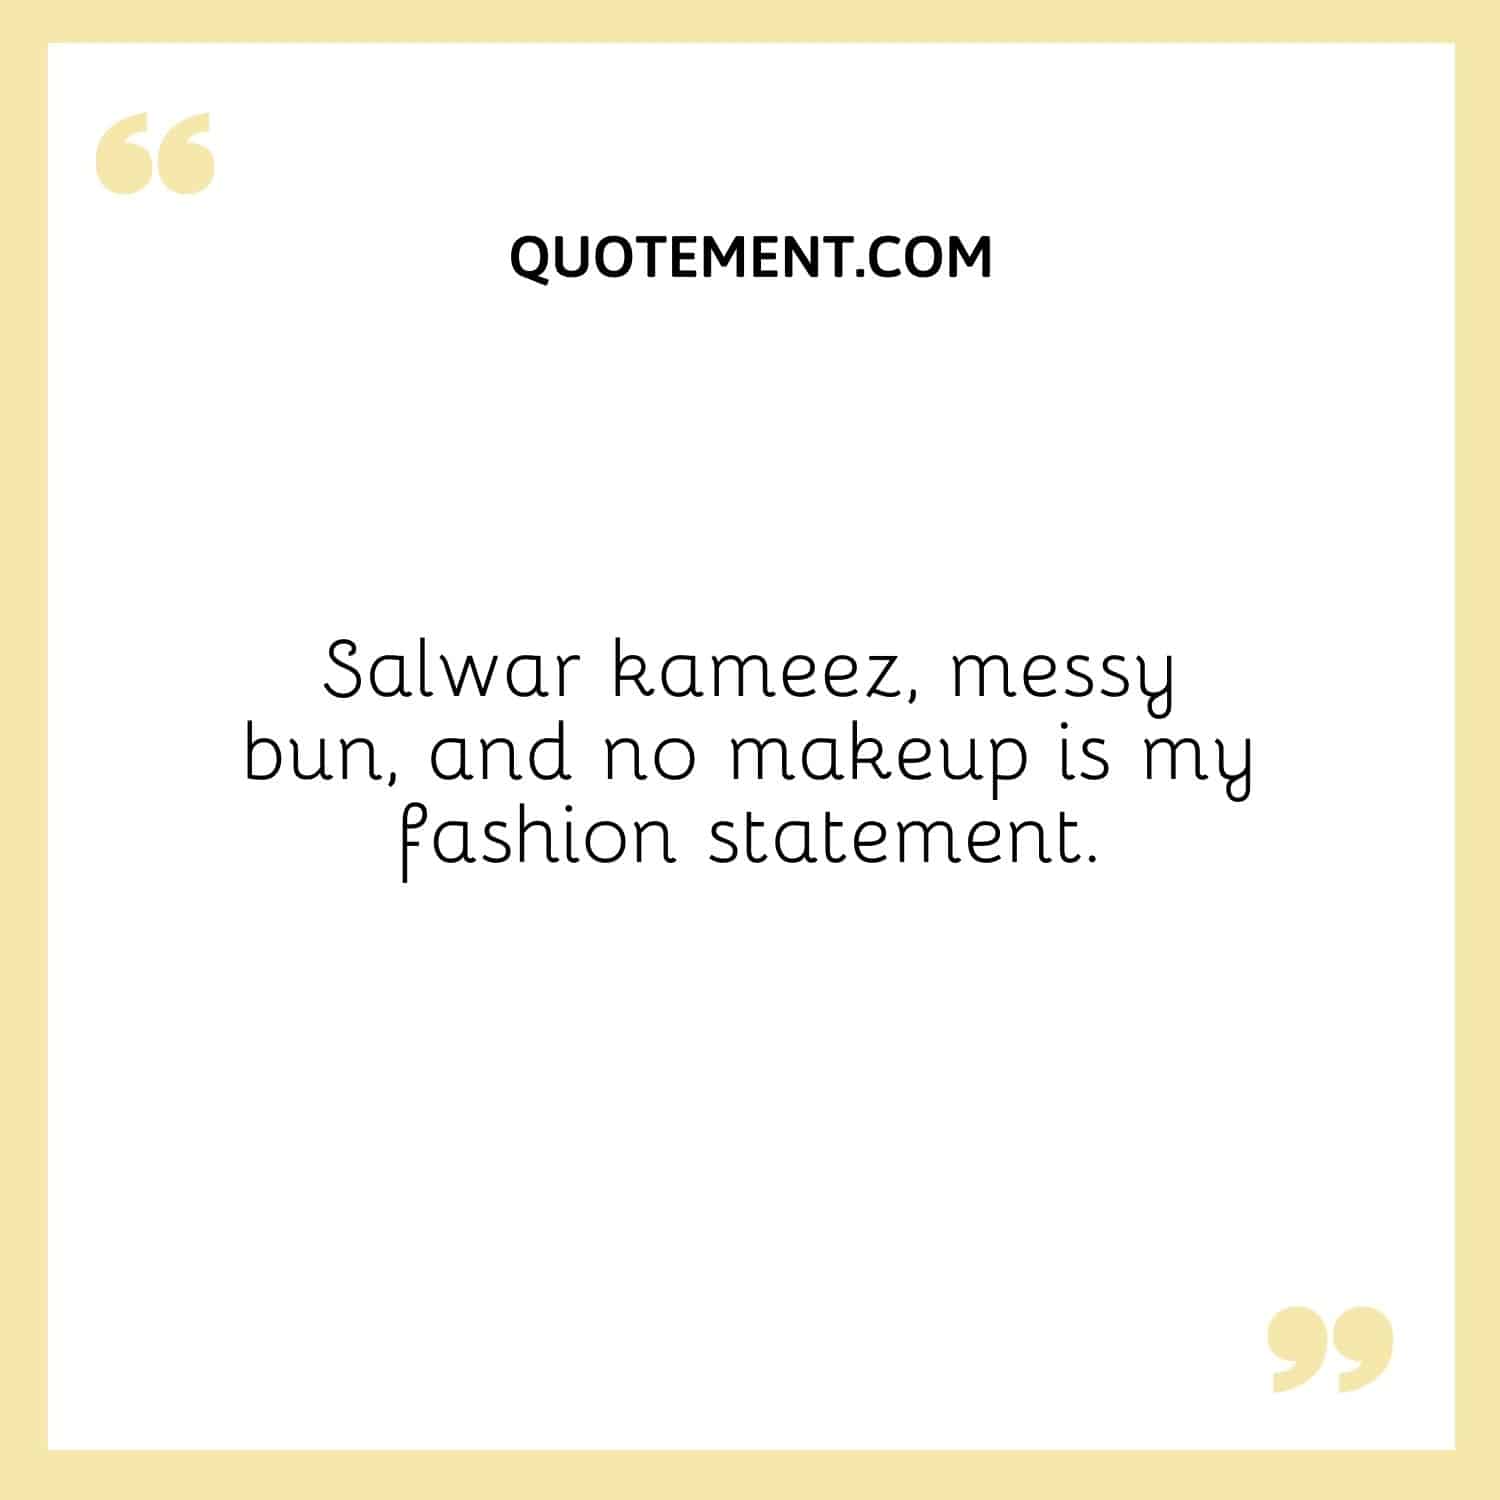 Salwar kameez, messy bun, and no makeup is my fashion statement.